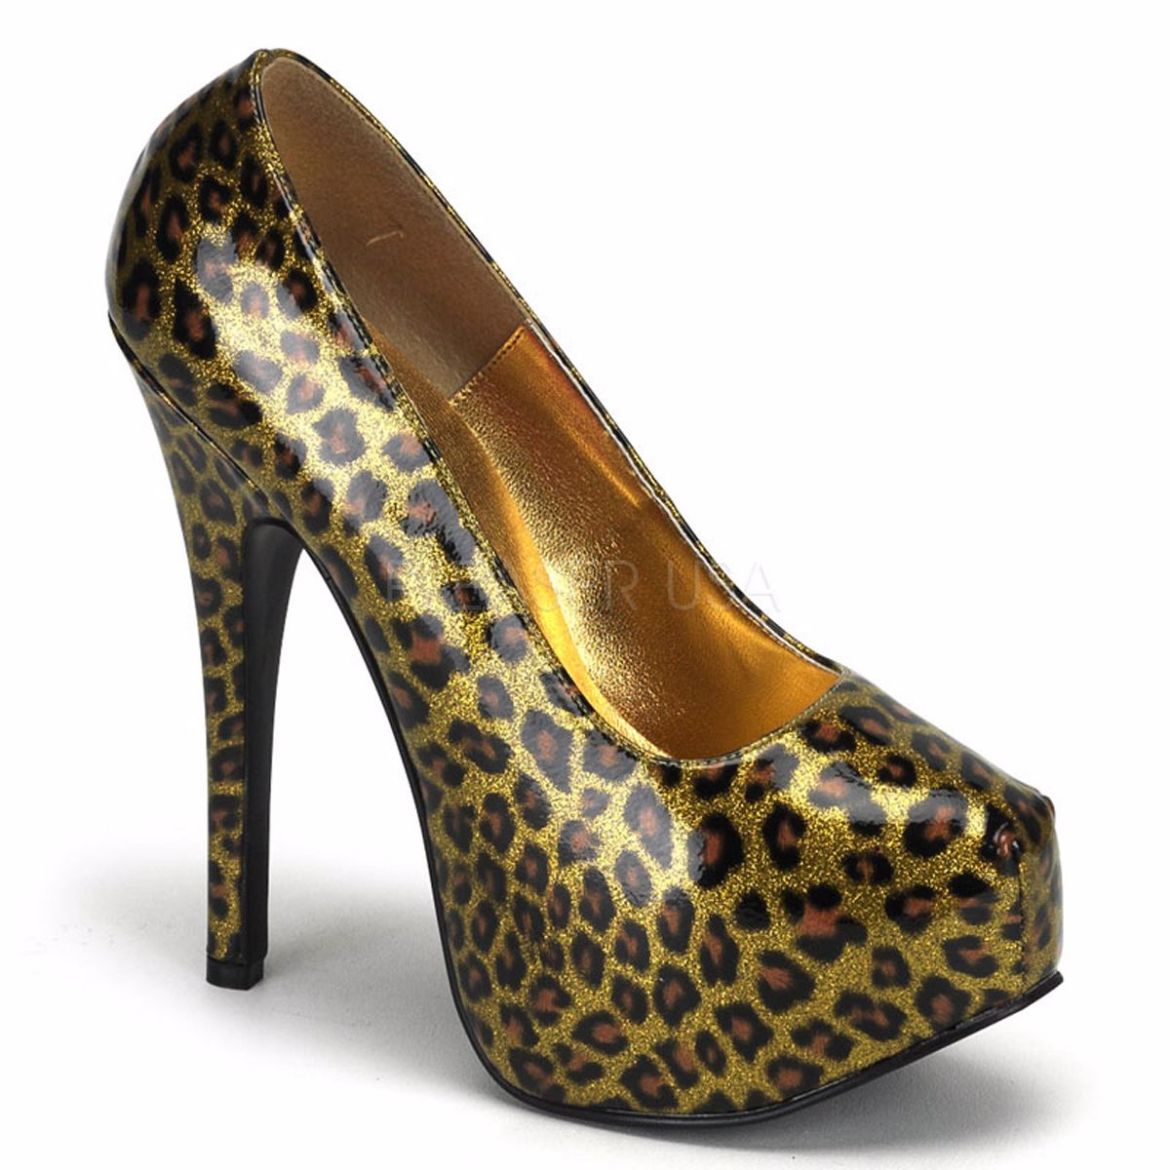 Product image of Bordello Teeze-37 Gold Cheetah Patent, 5 3/4 inch (14.6 cm) Heel, 1 3/4 inch (4.4 cm) Platform Court Pump Shoes